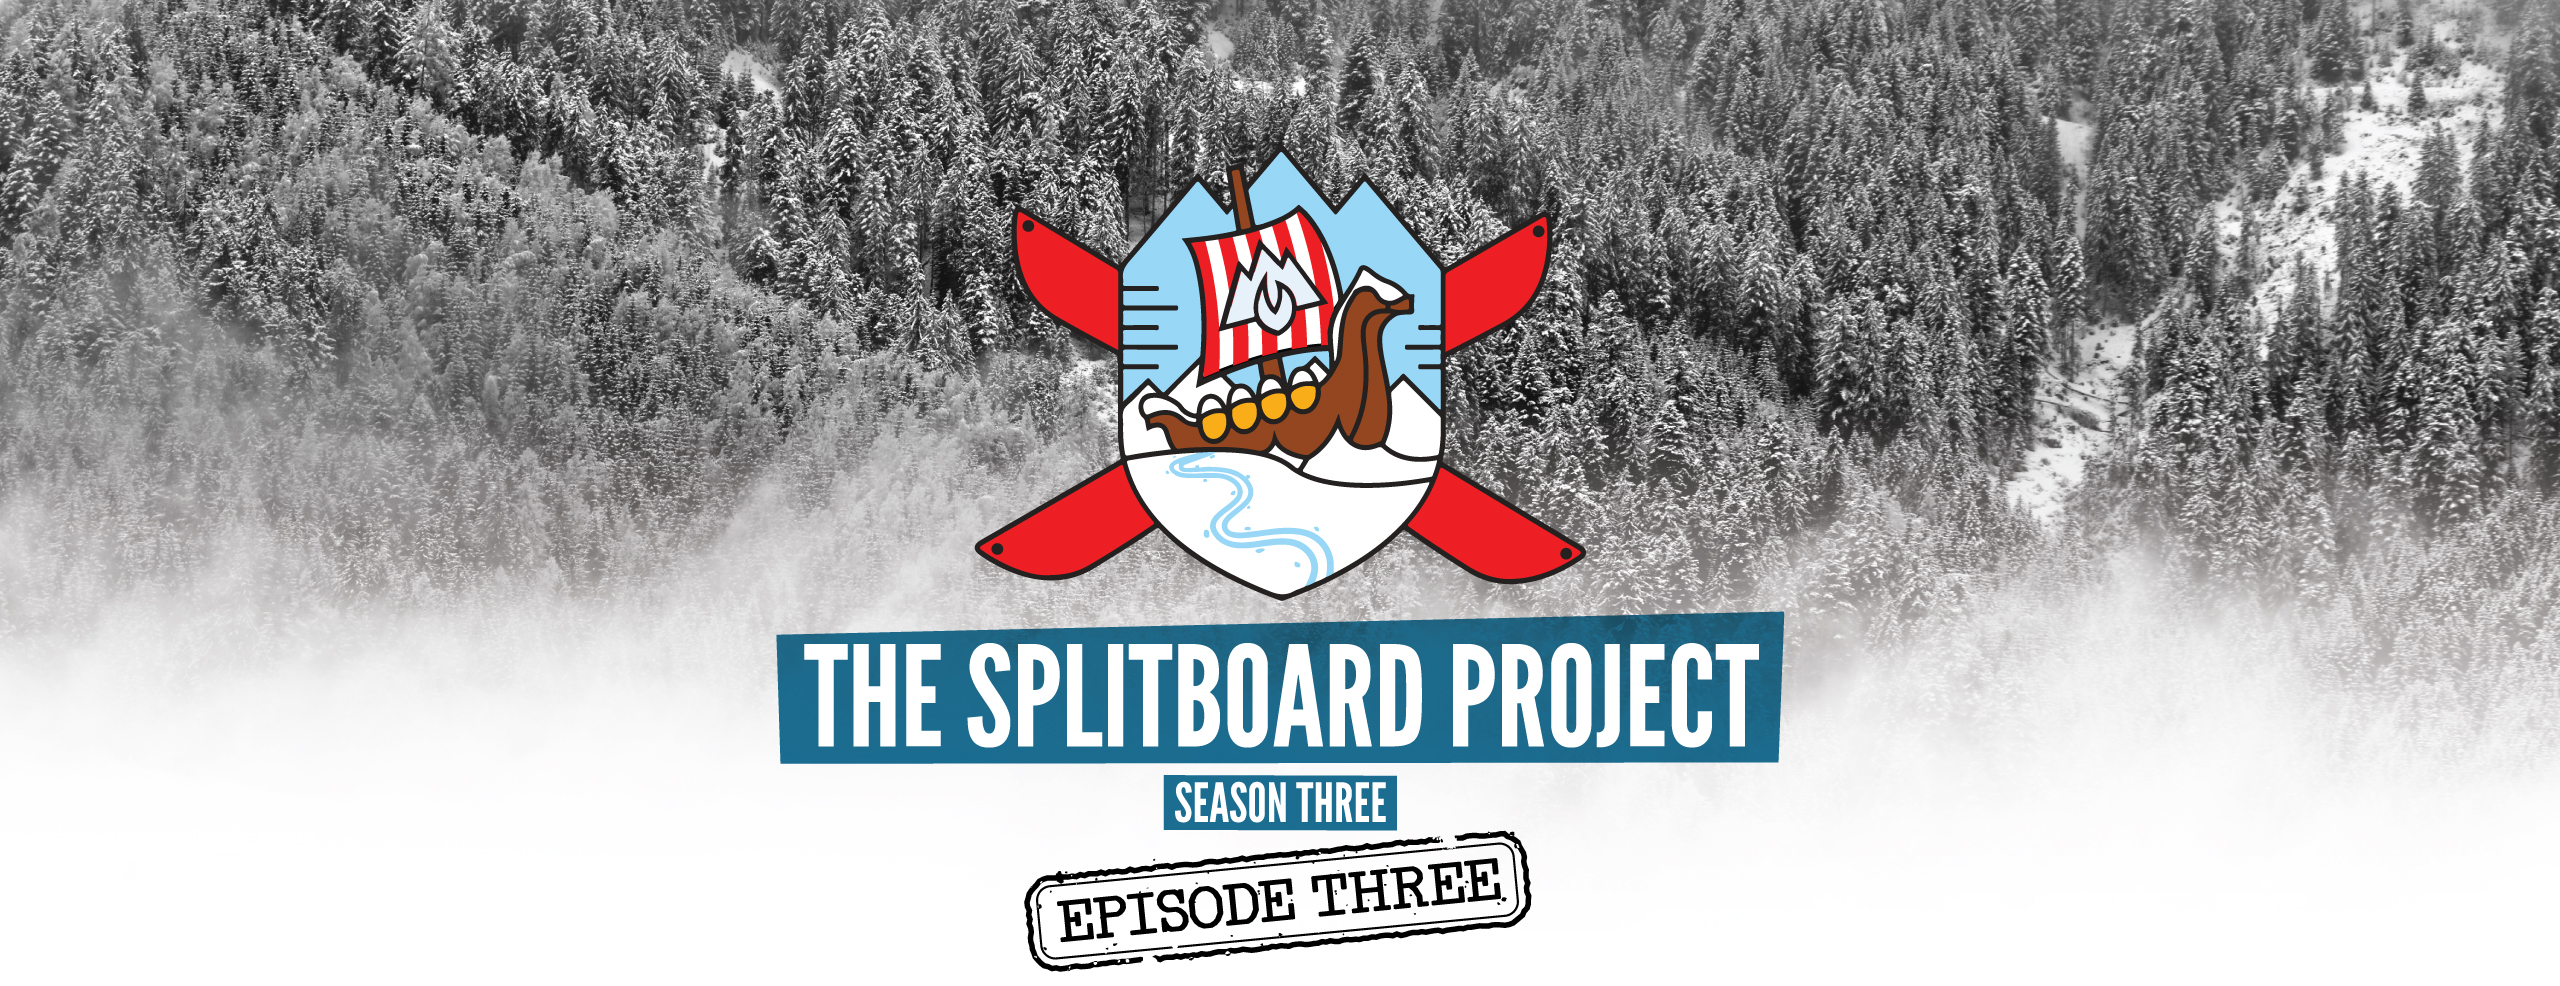 The splitboard project header image